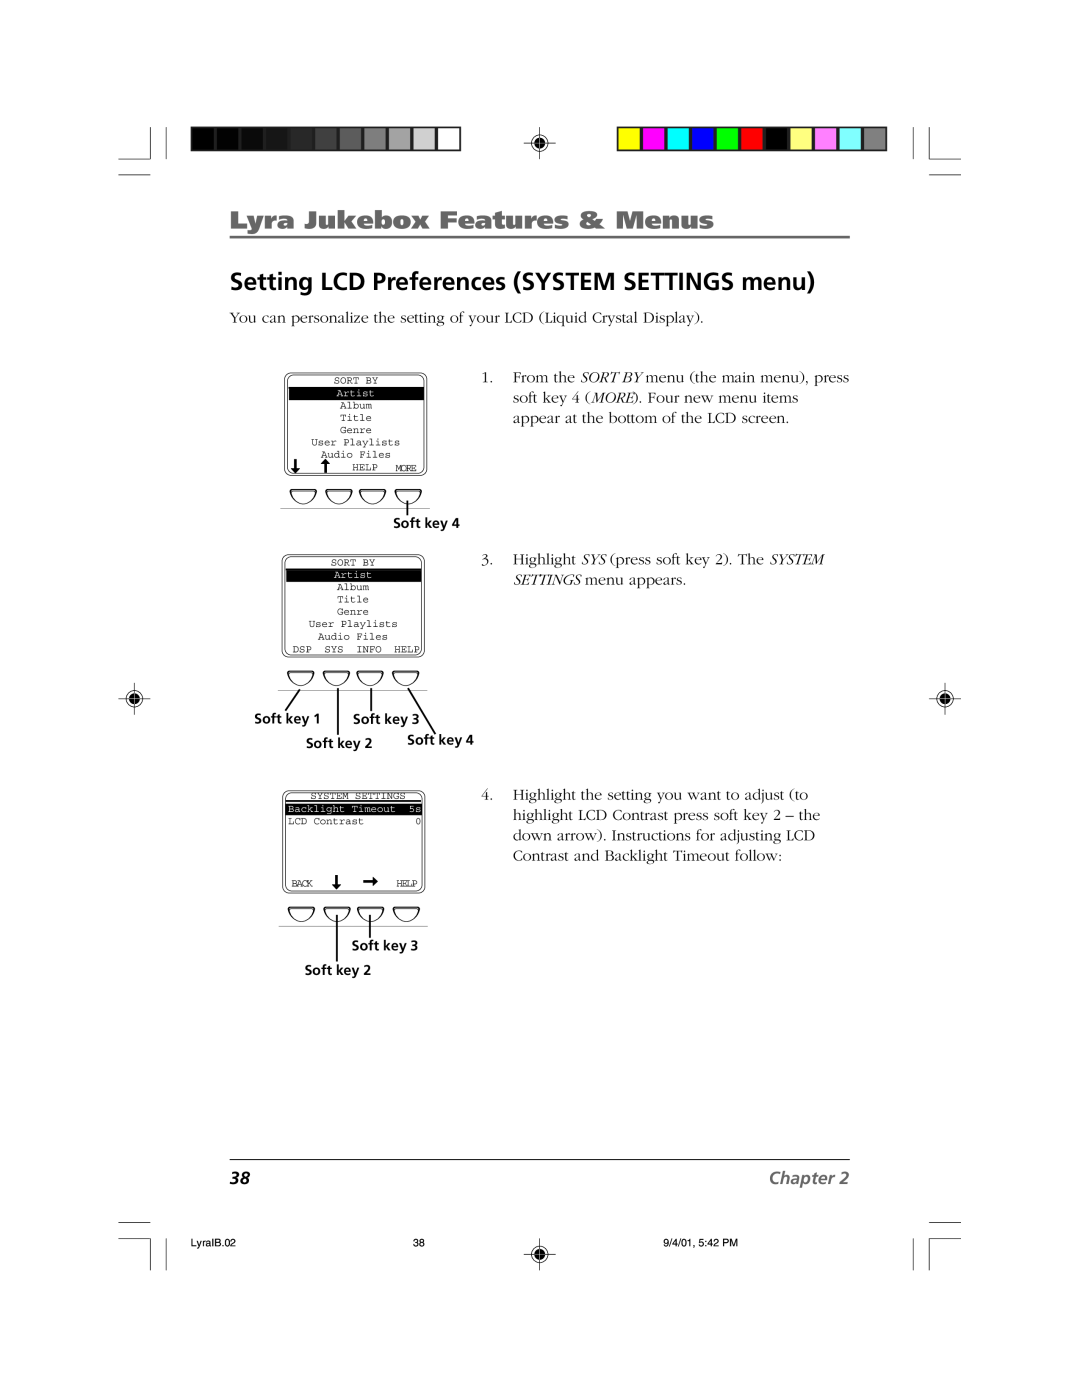 RCA RD2800 manual Setting LCD Preferences SYSTEM SETTINGS menu, Lyra Jukebox Features & Menus, Chapter, LyraIB.02 